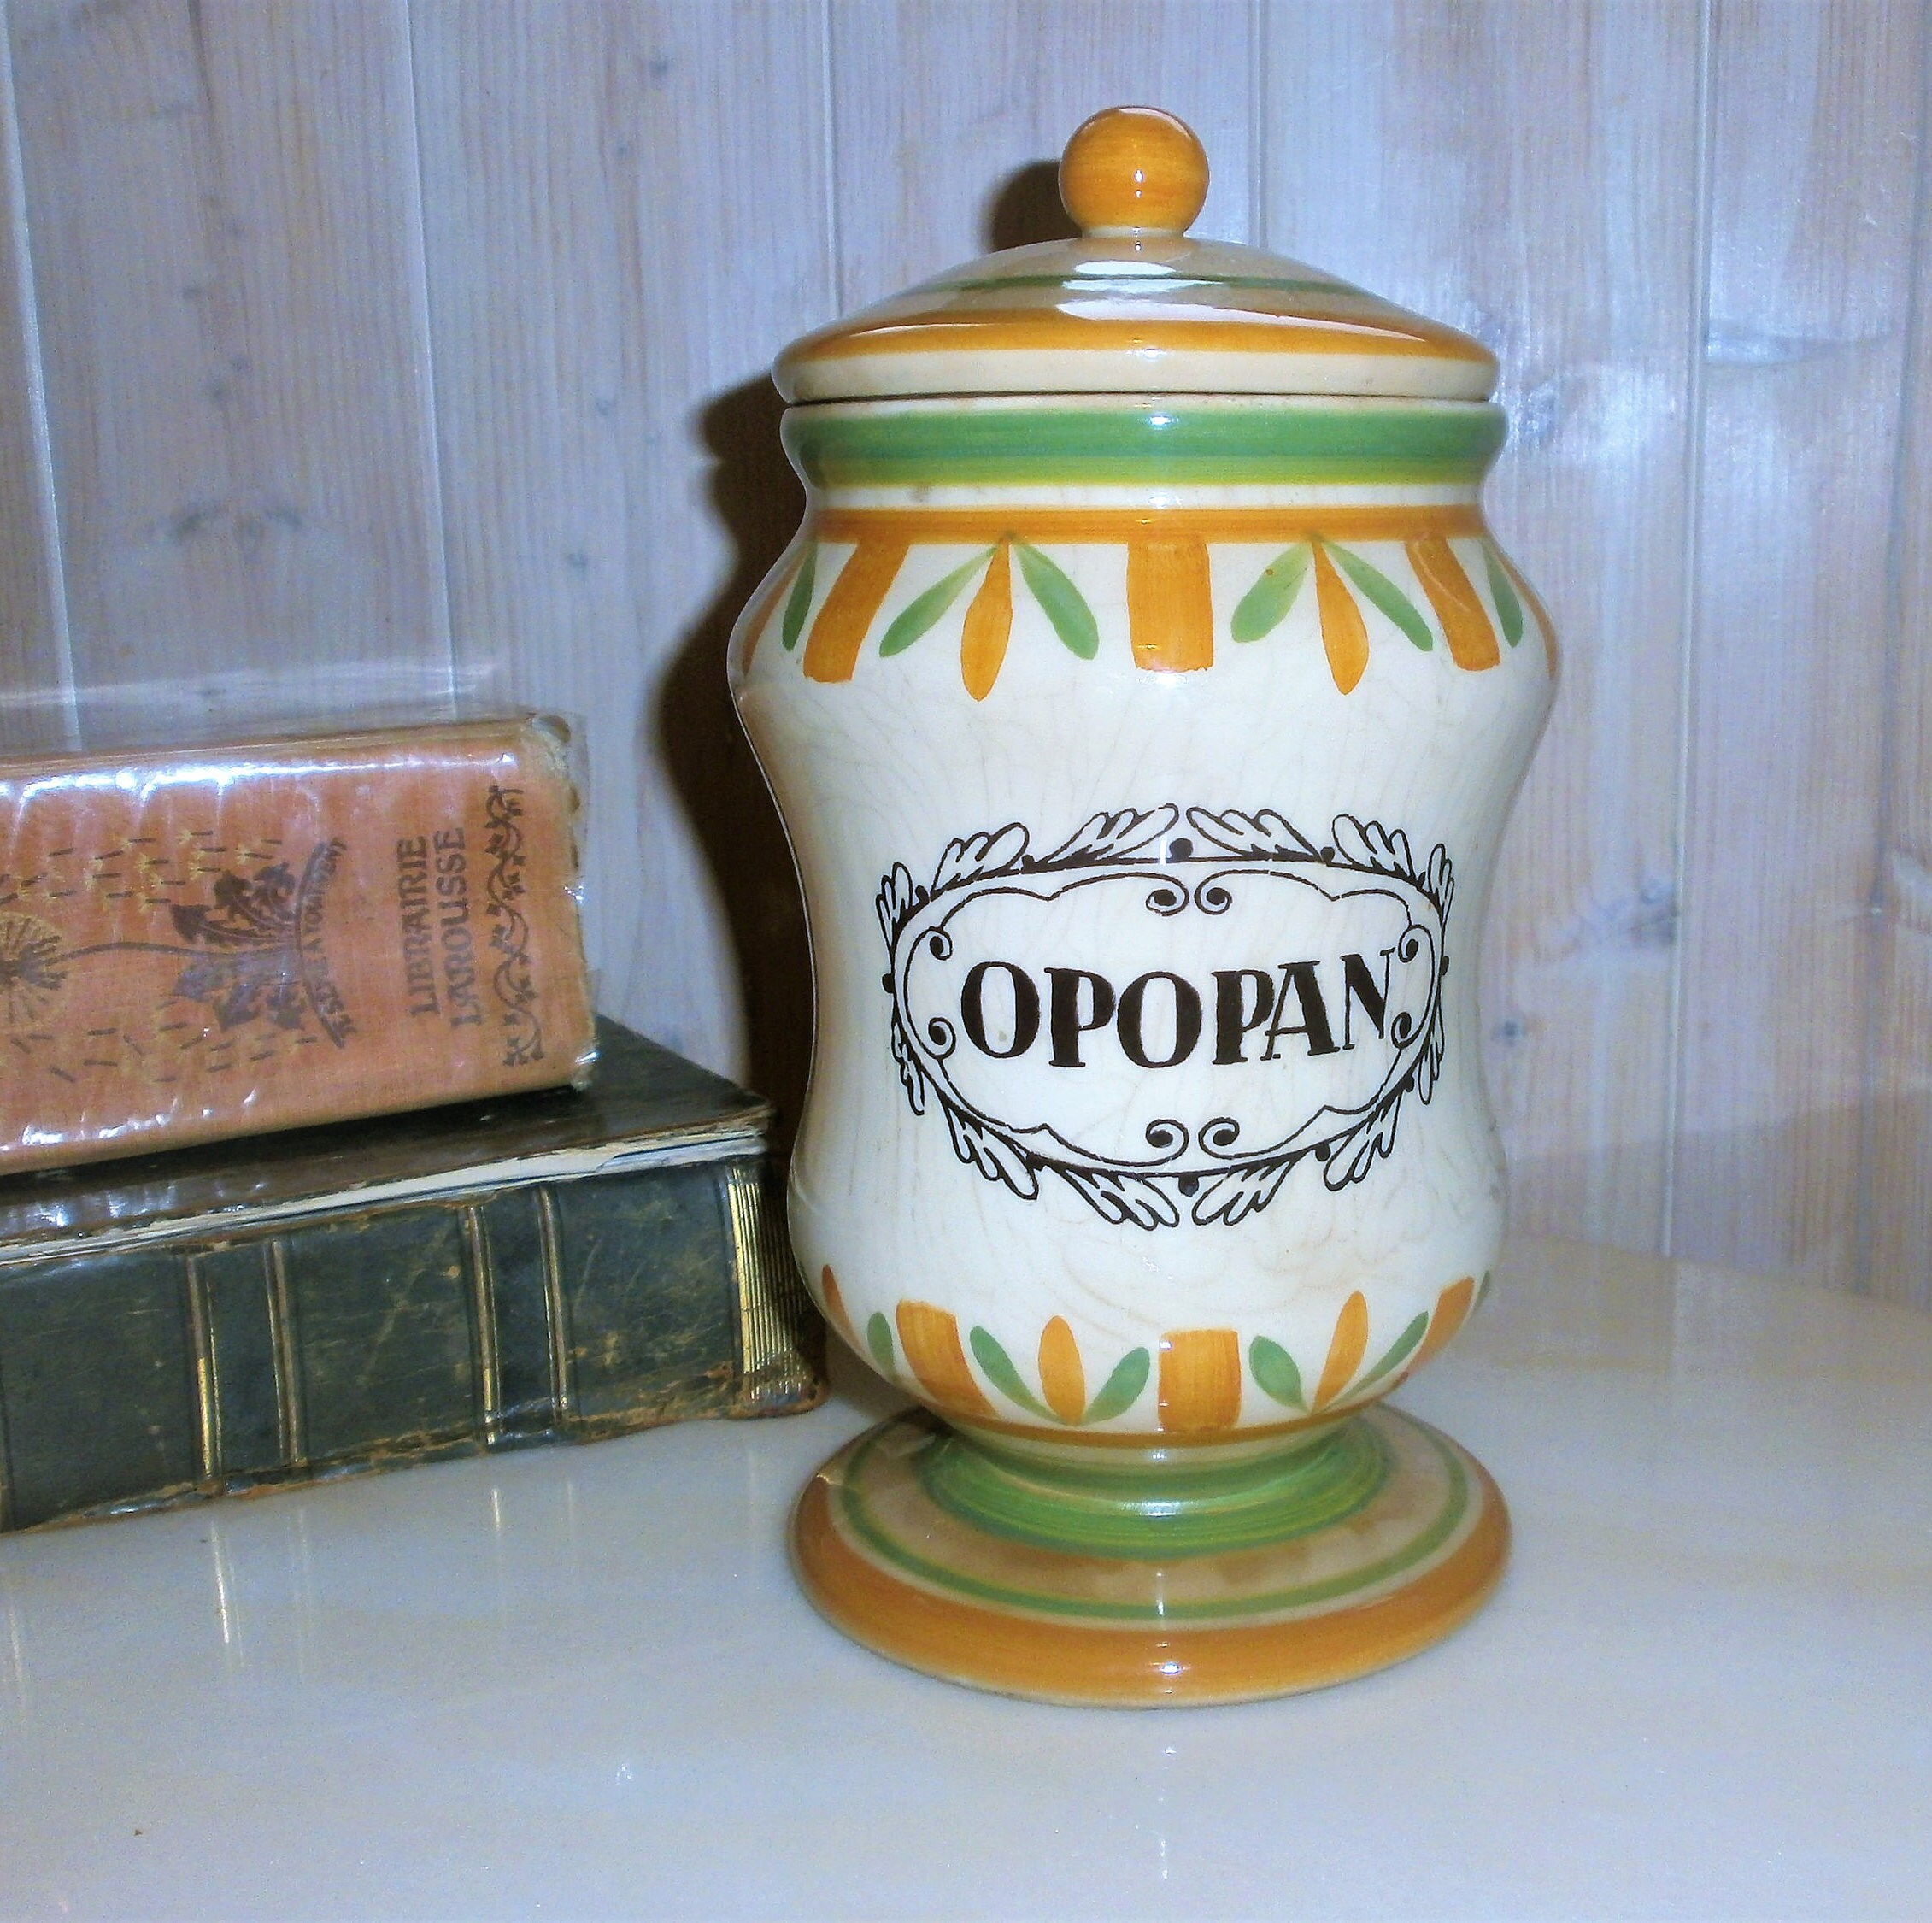 Français Vintage Pot d' Apothicaire//Opopan//French Apothecary Canister//Vintage Pharmacy Pot//Gien 